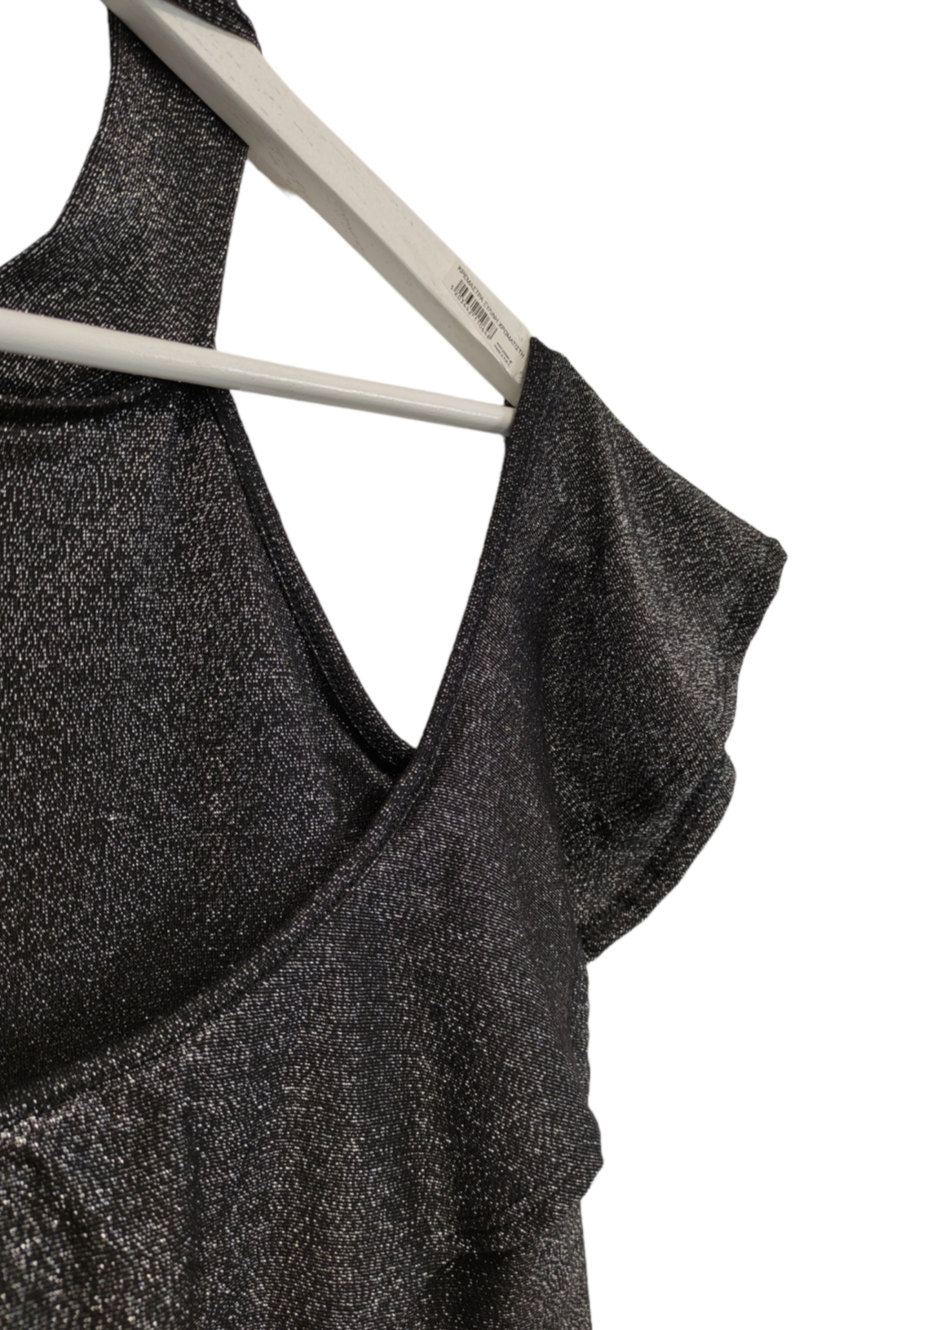 Stock, Lurex, Maxi Ελαστικό Φόρεμα PINK CLOVE σε Μαύρο - Ασημί Χρώμα (2XL)